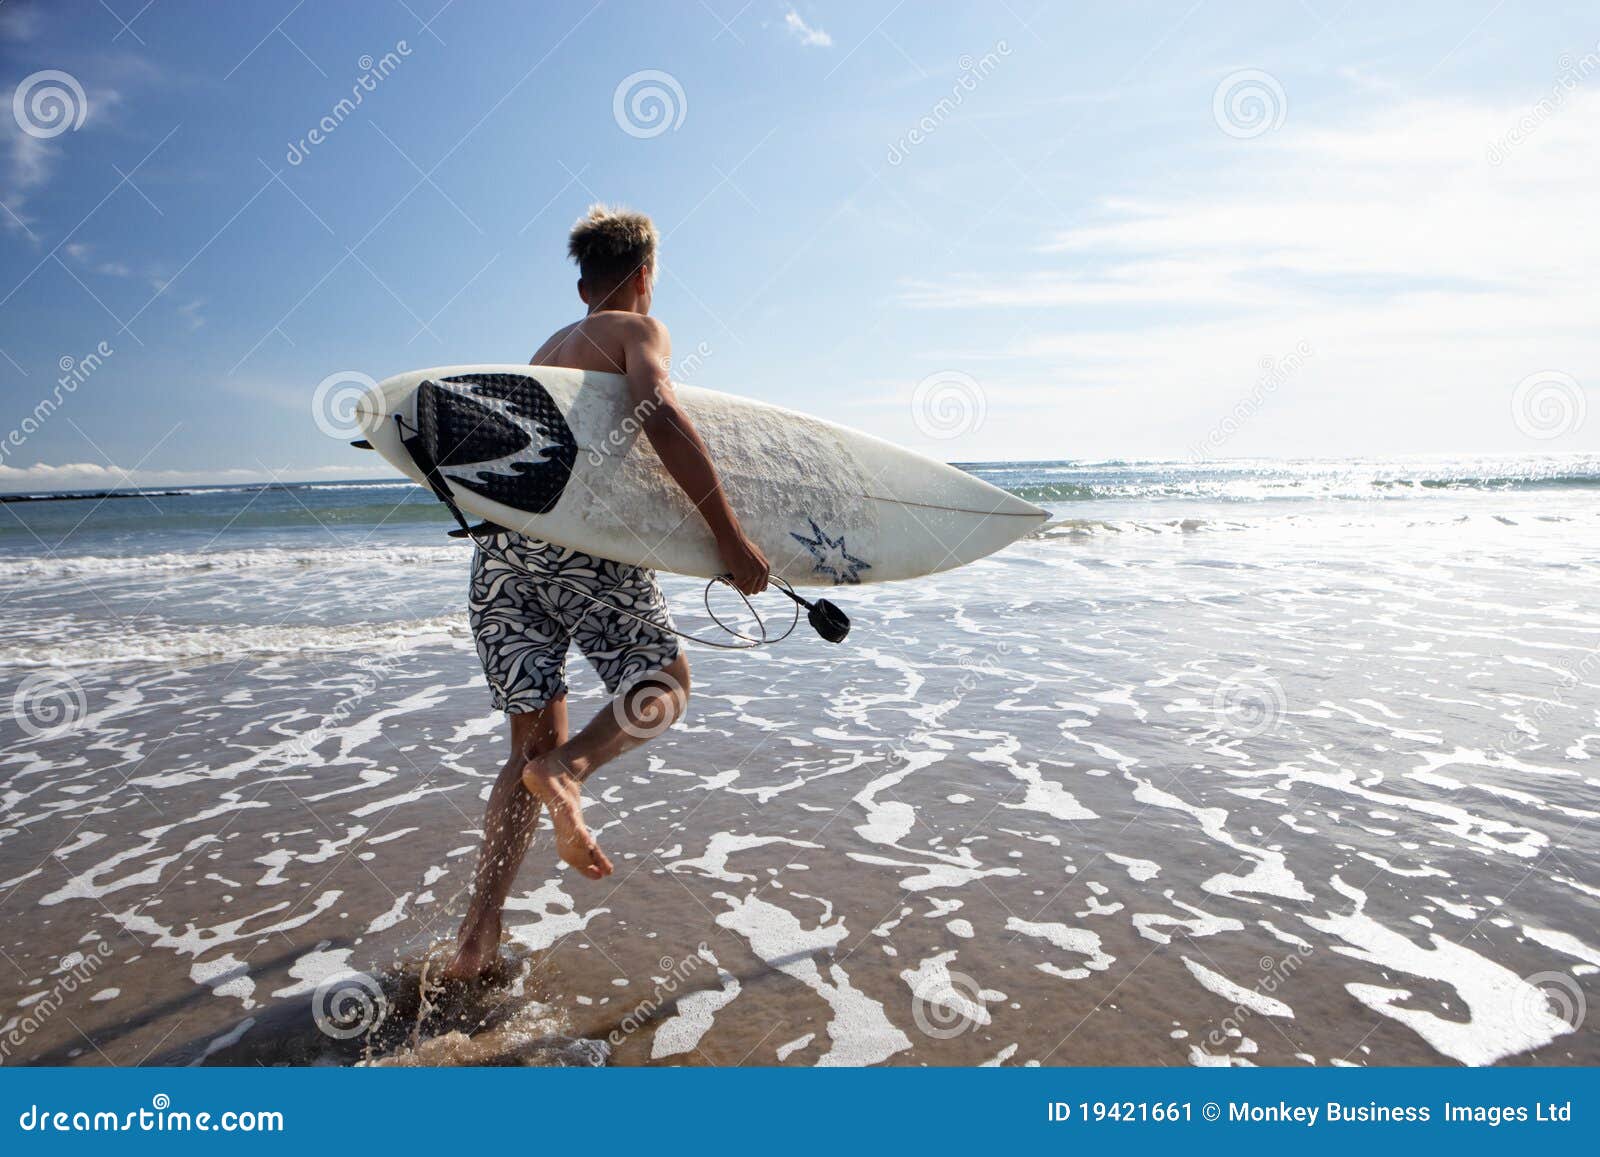 boys surfing